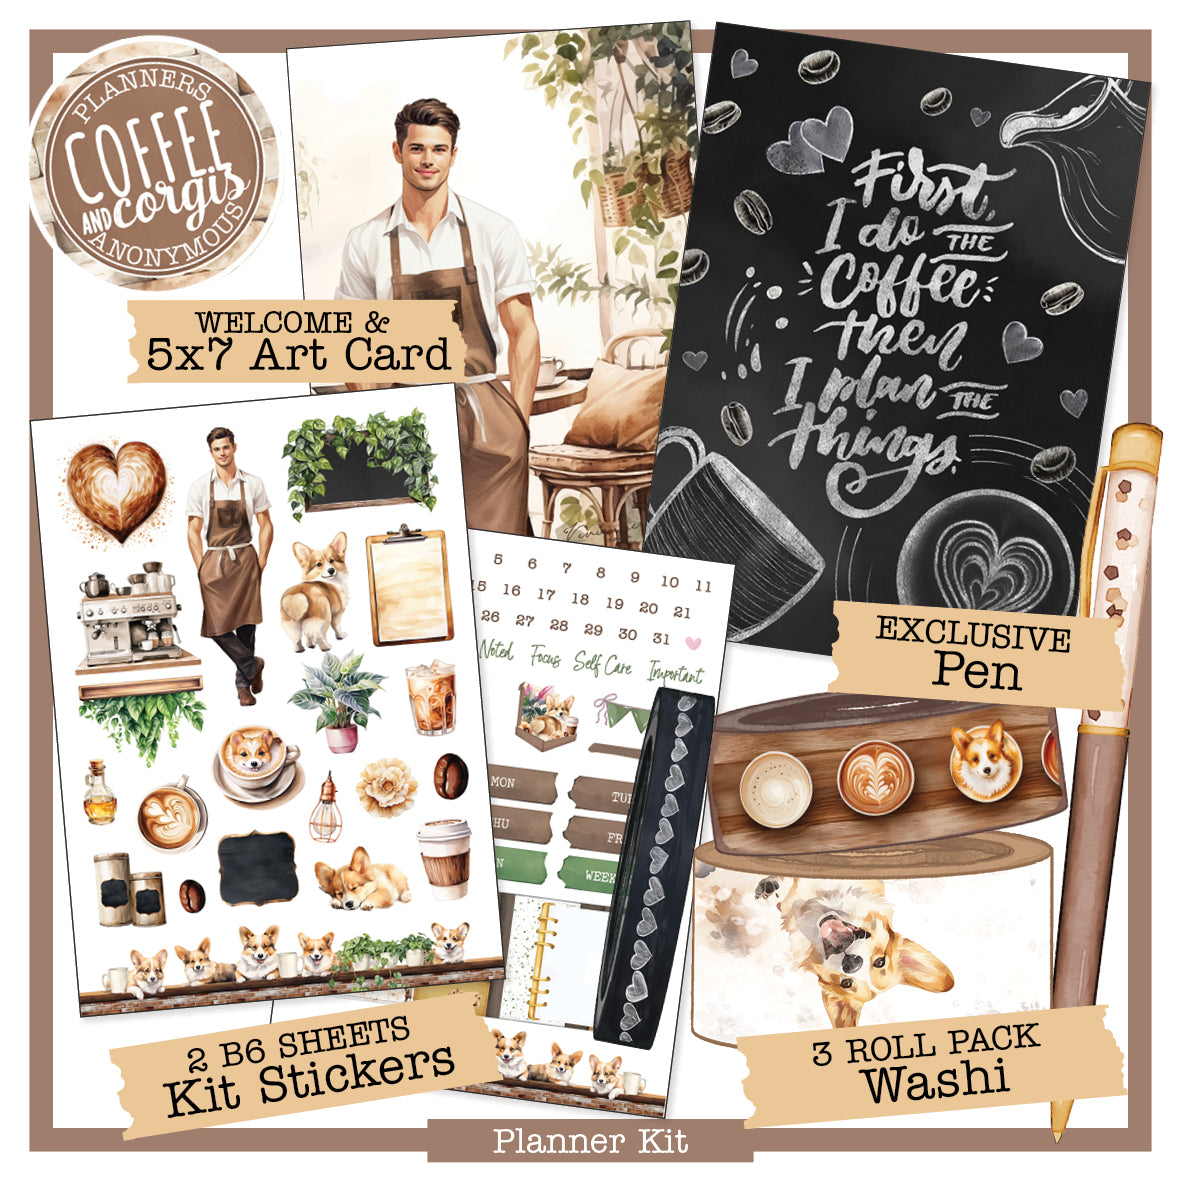 Coffee and Corgis Planner Kit